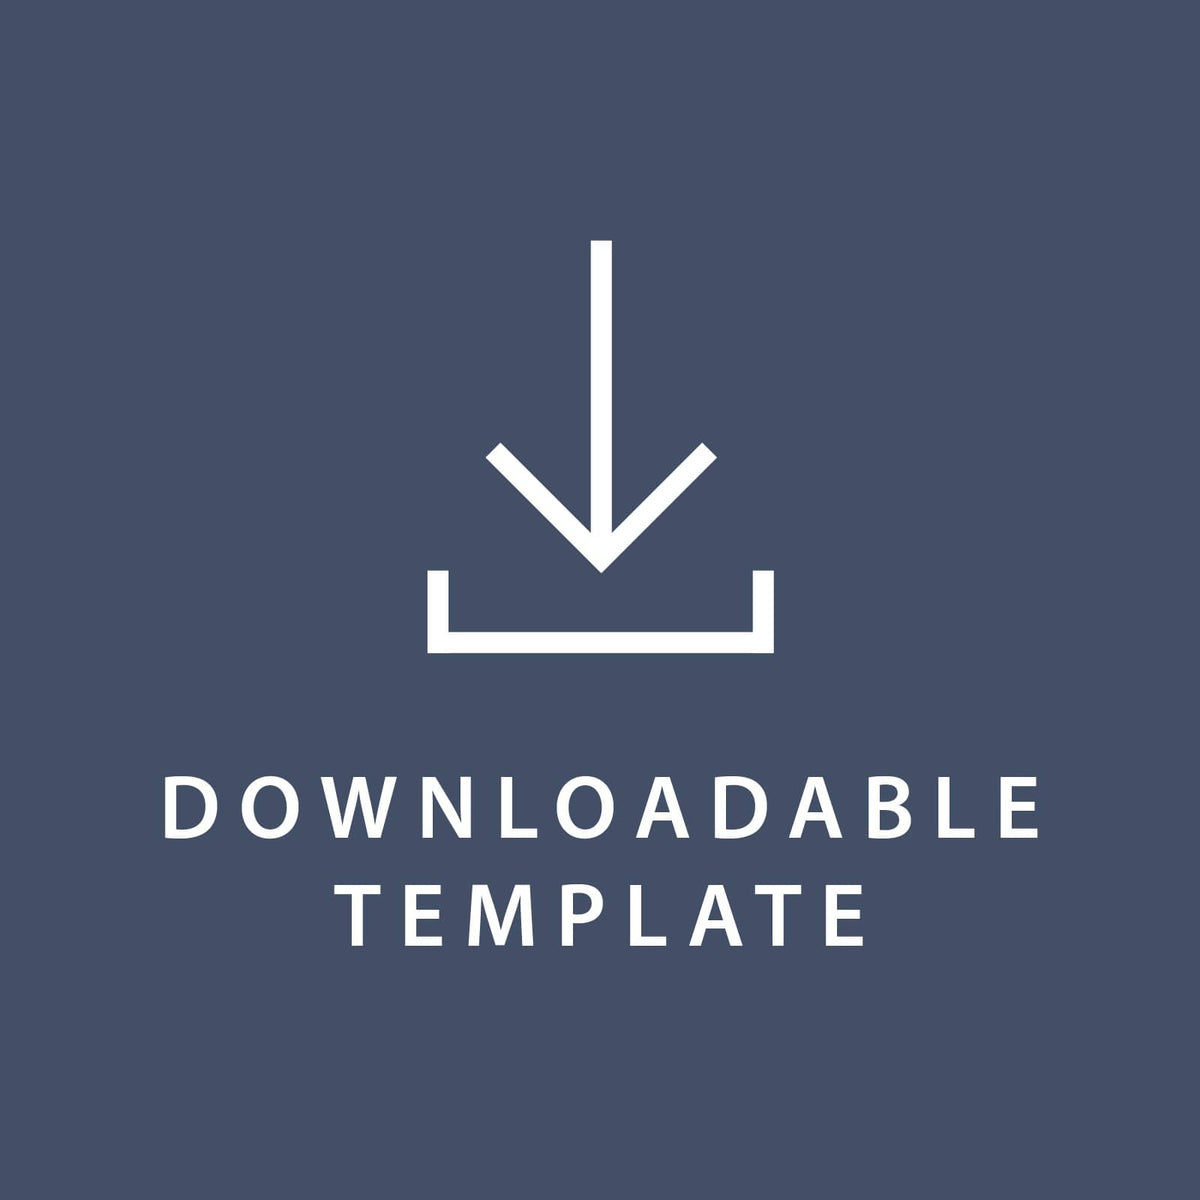 Template for 11 x 8.5 Post Cards Gartner Studios Template tmplt0887